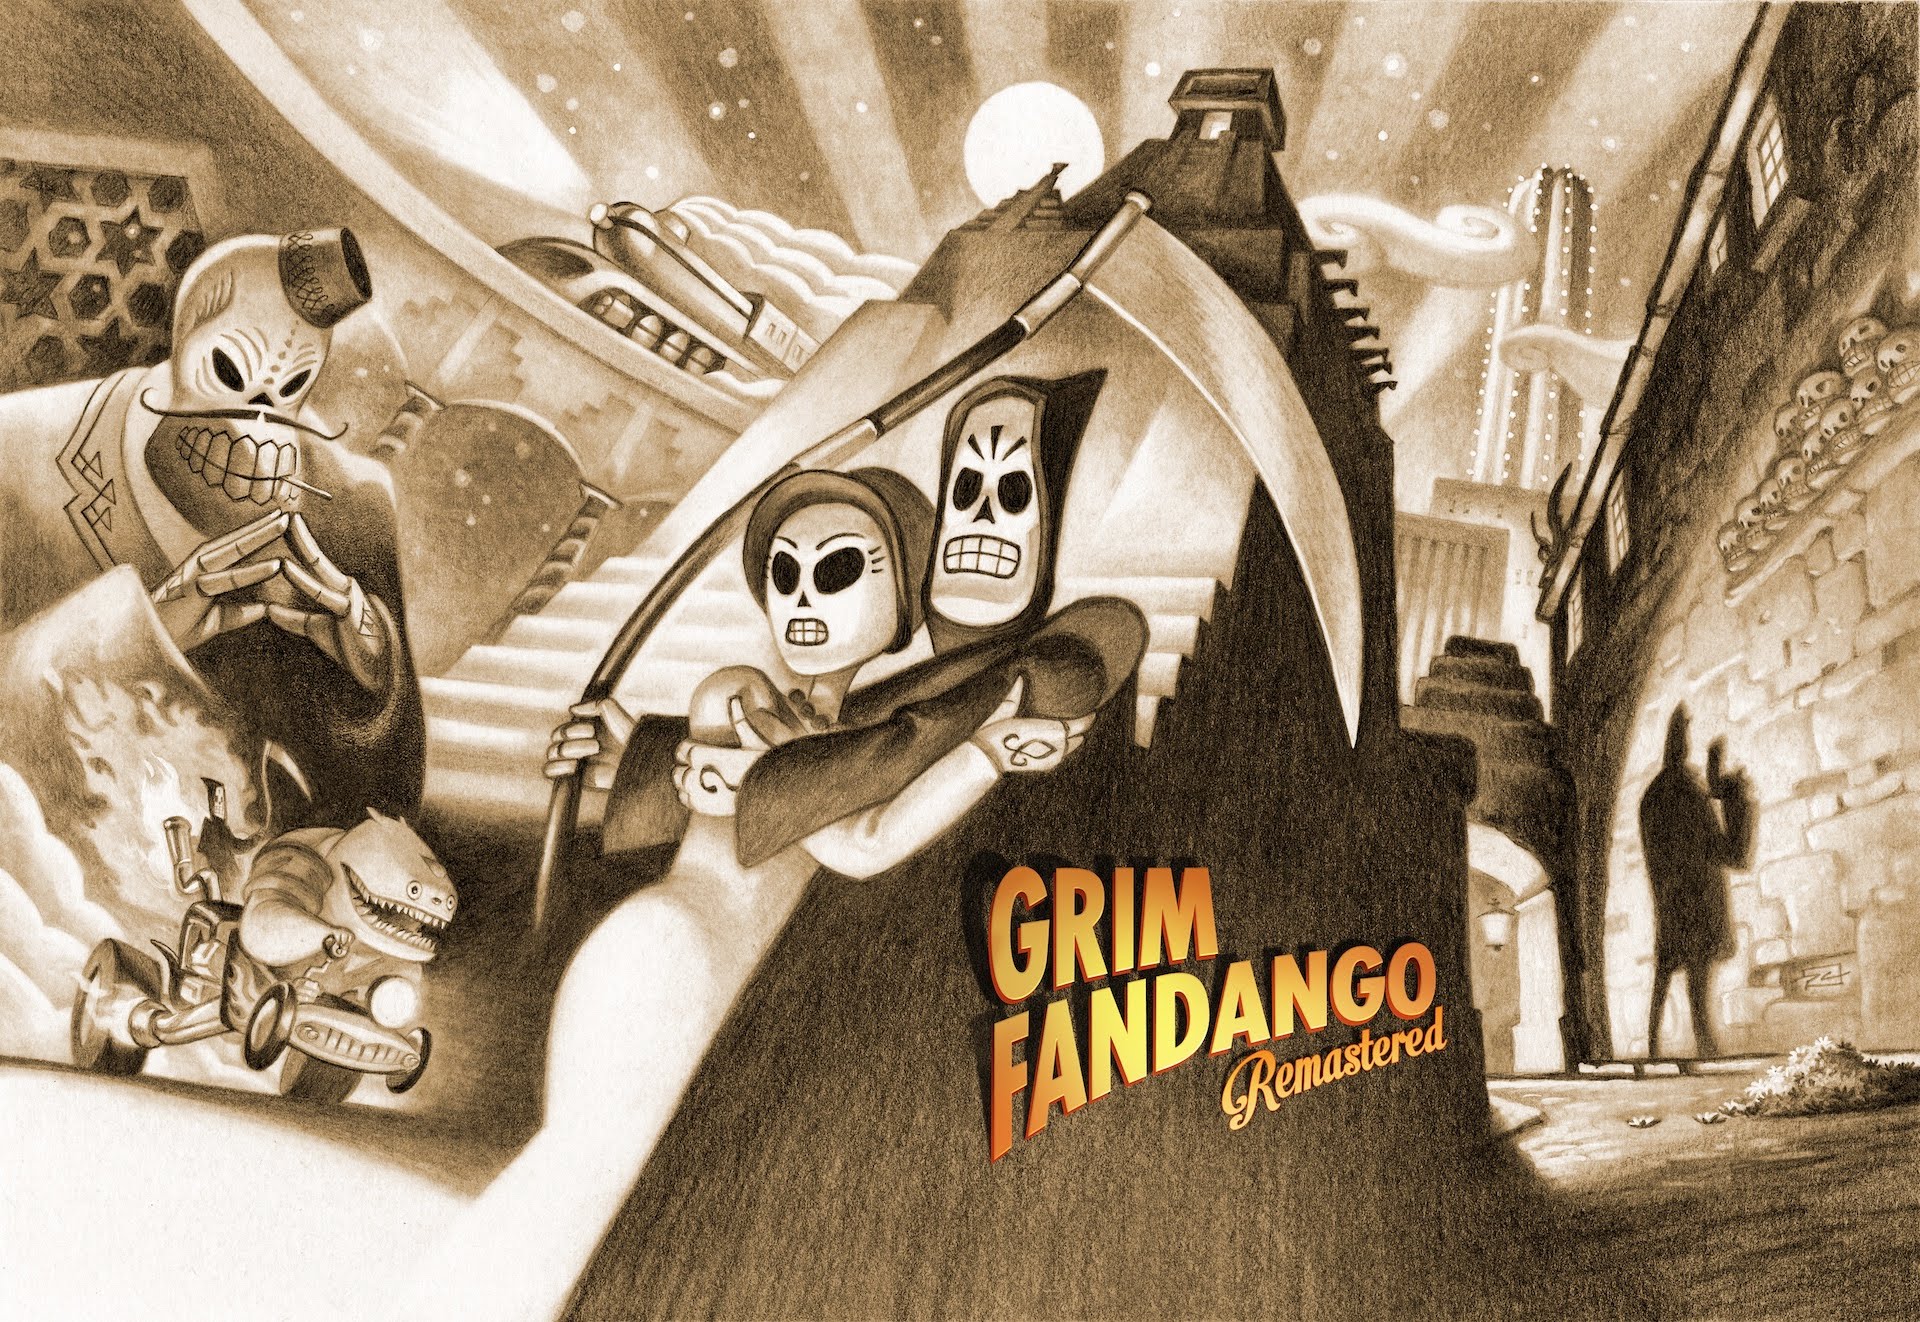 Grim Fandango Remastered écran titre logo